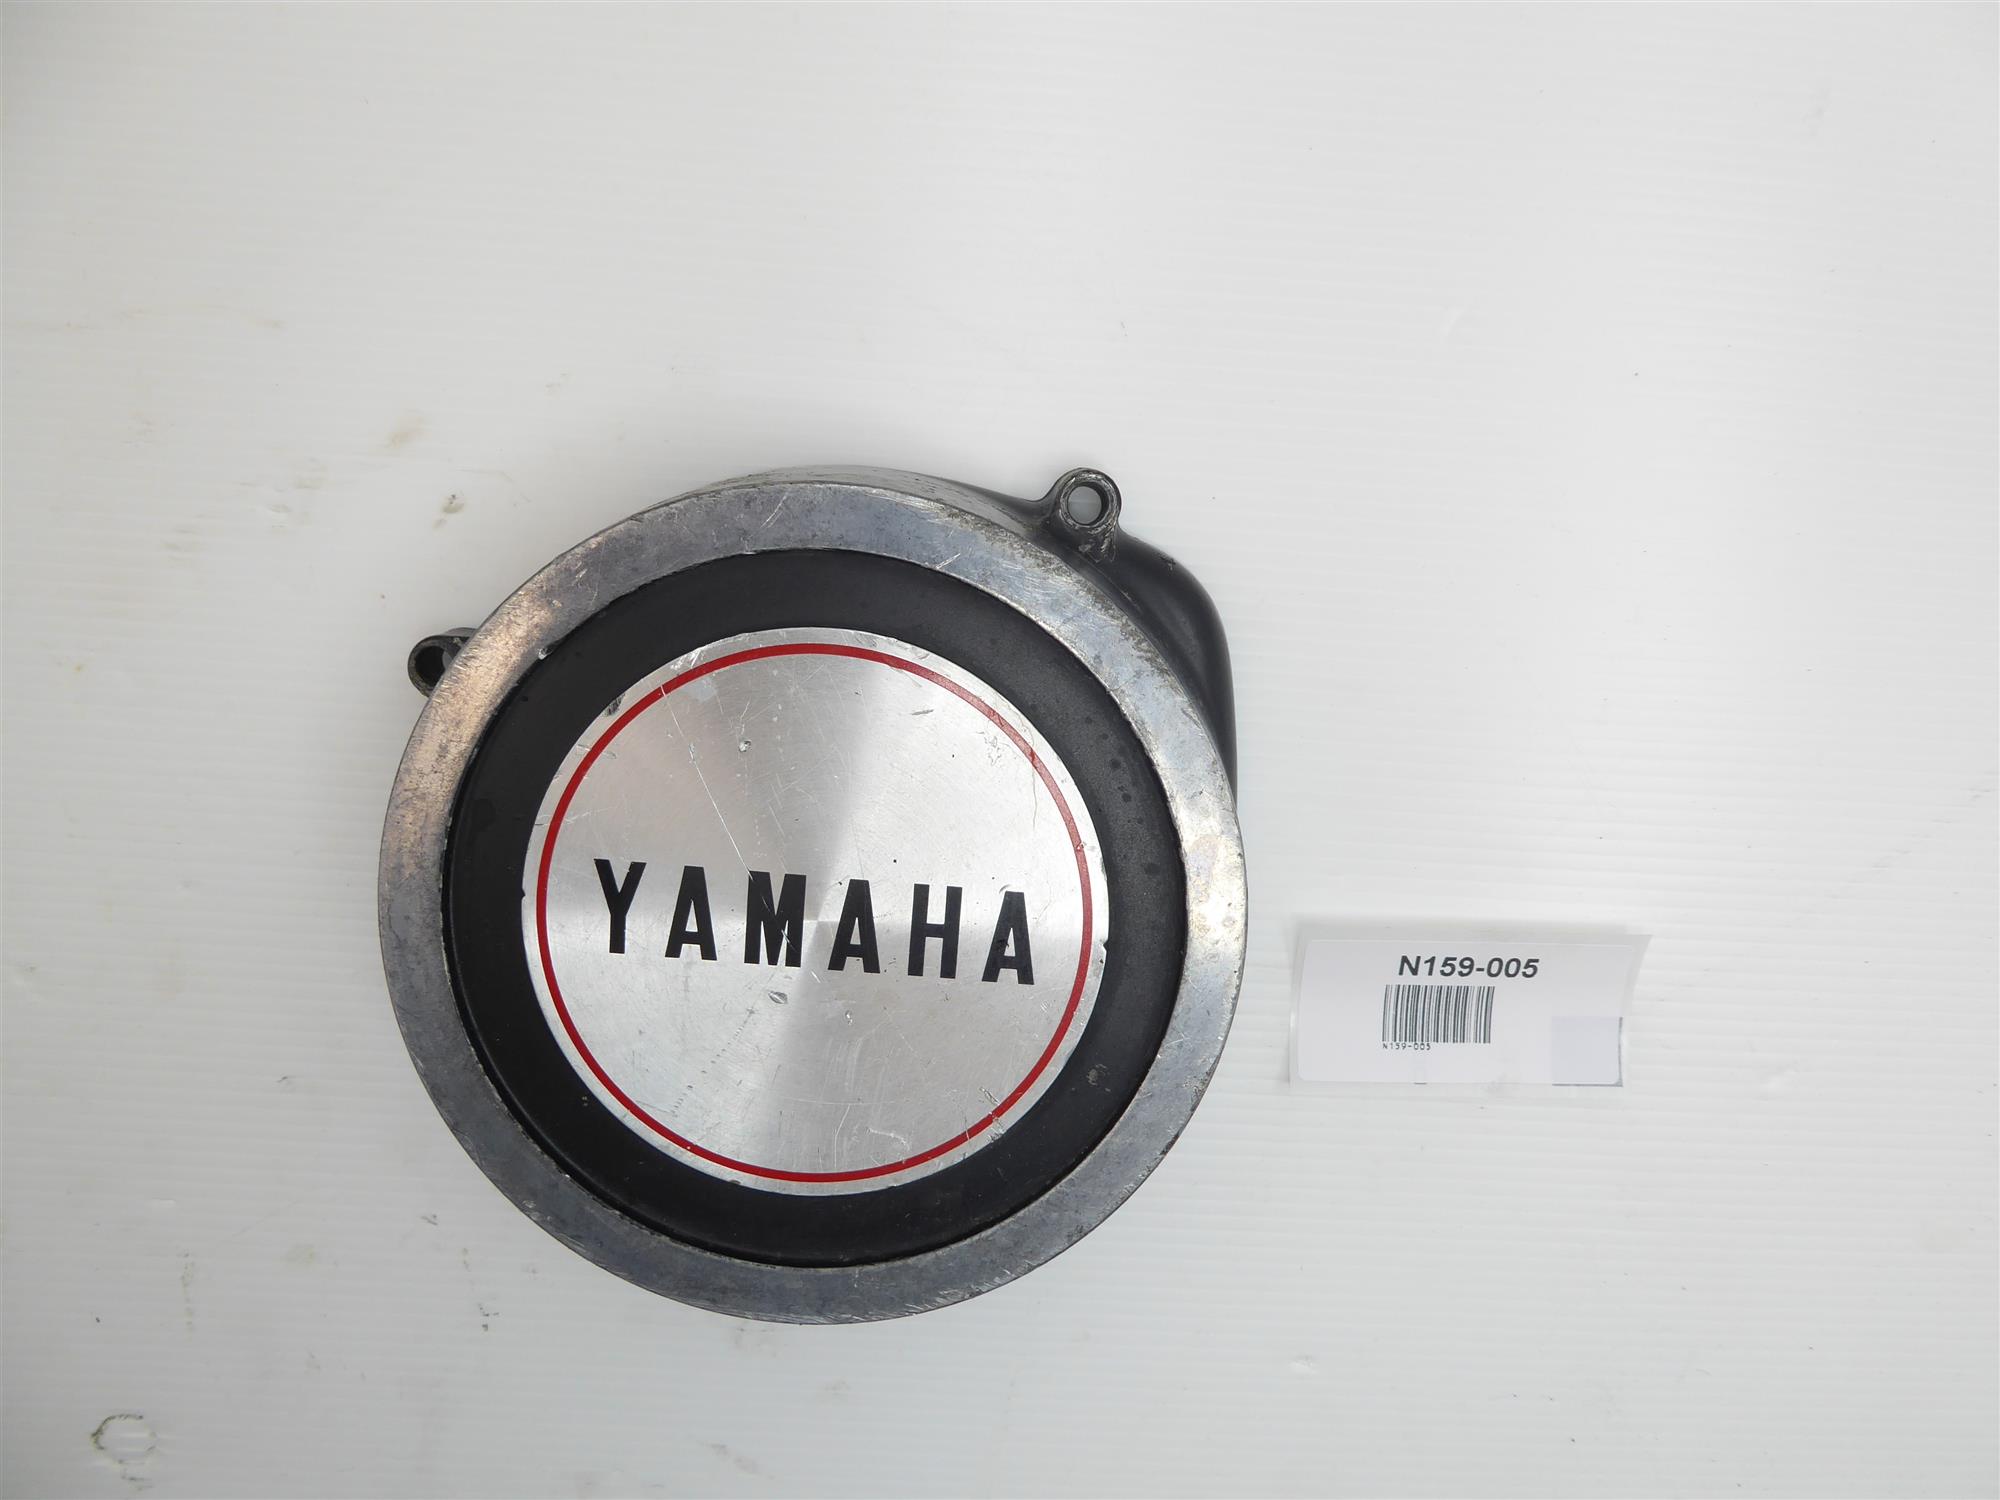 Yamaha RD 250 73-79 Alternator cover 360-15415-01-00